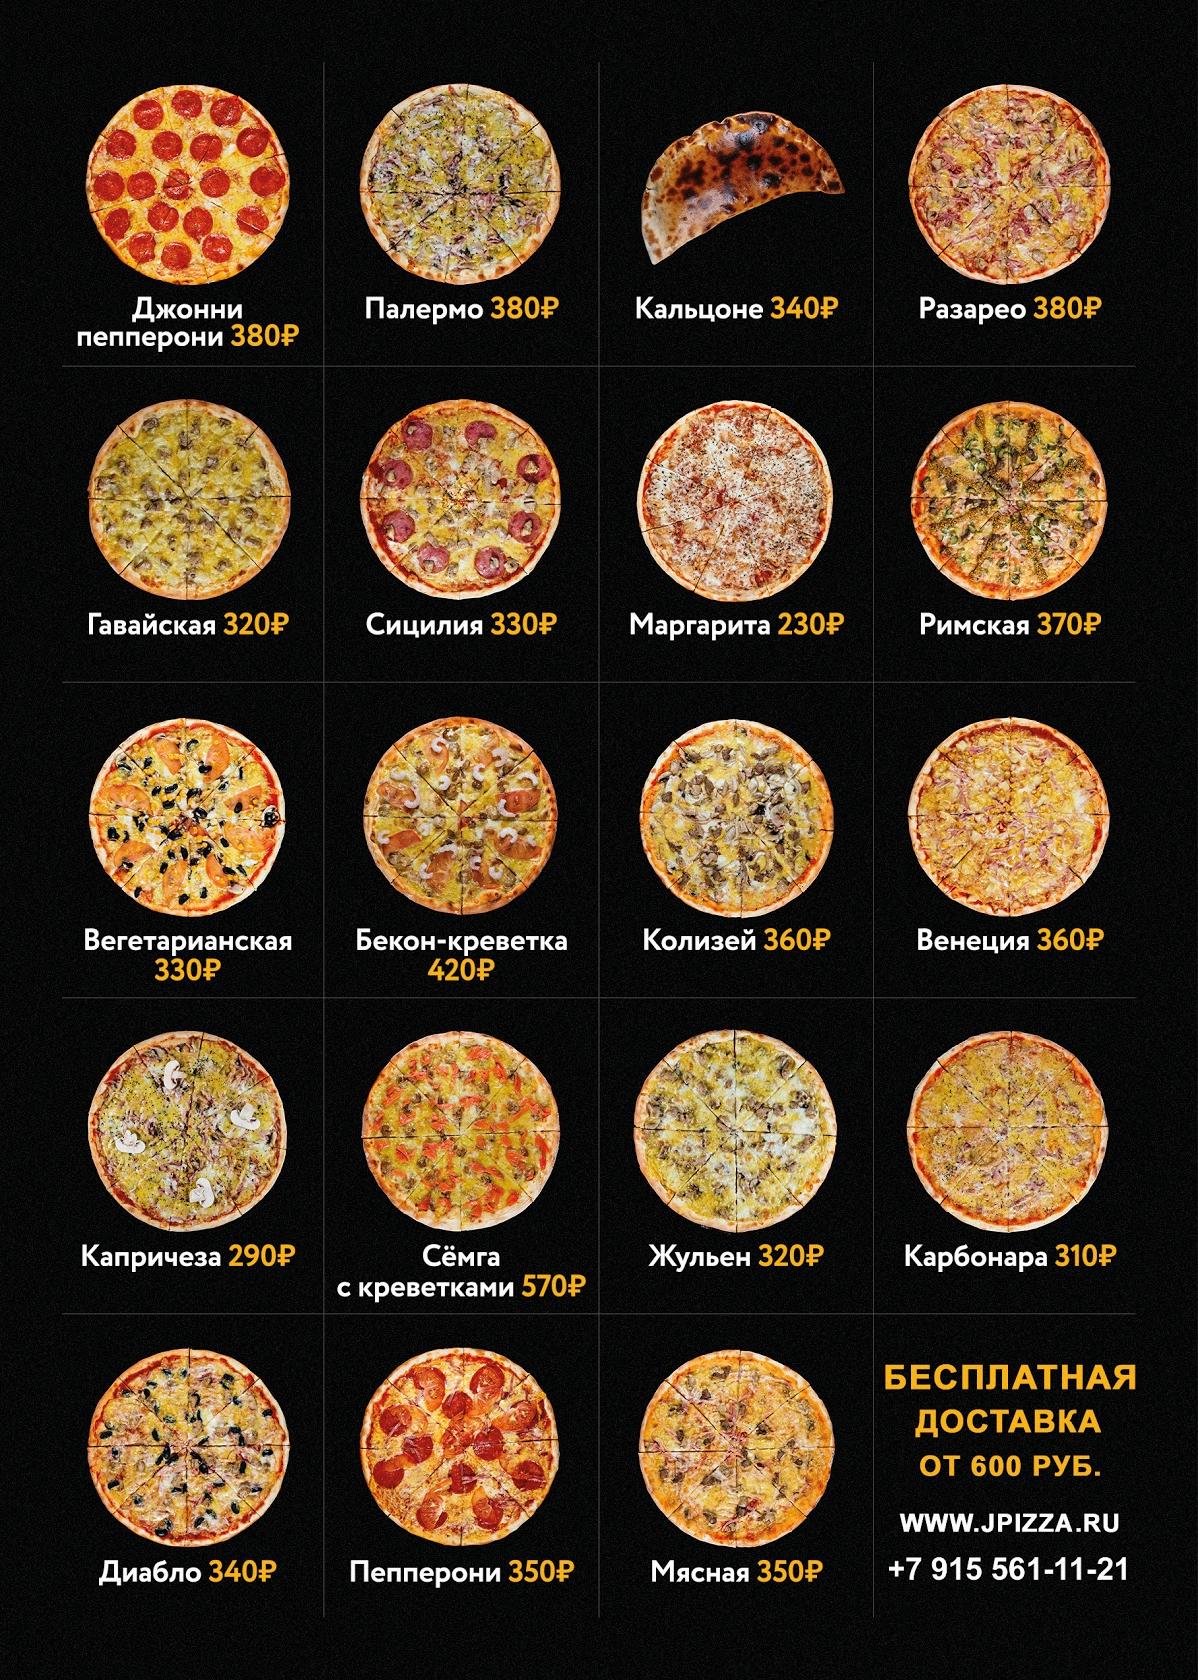 все виды пицц фото